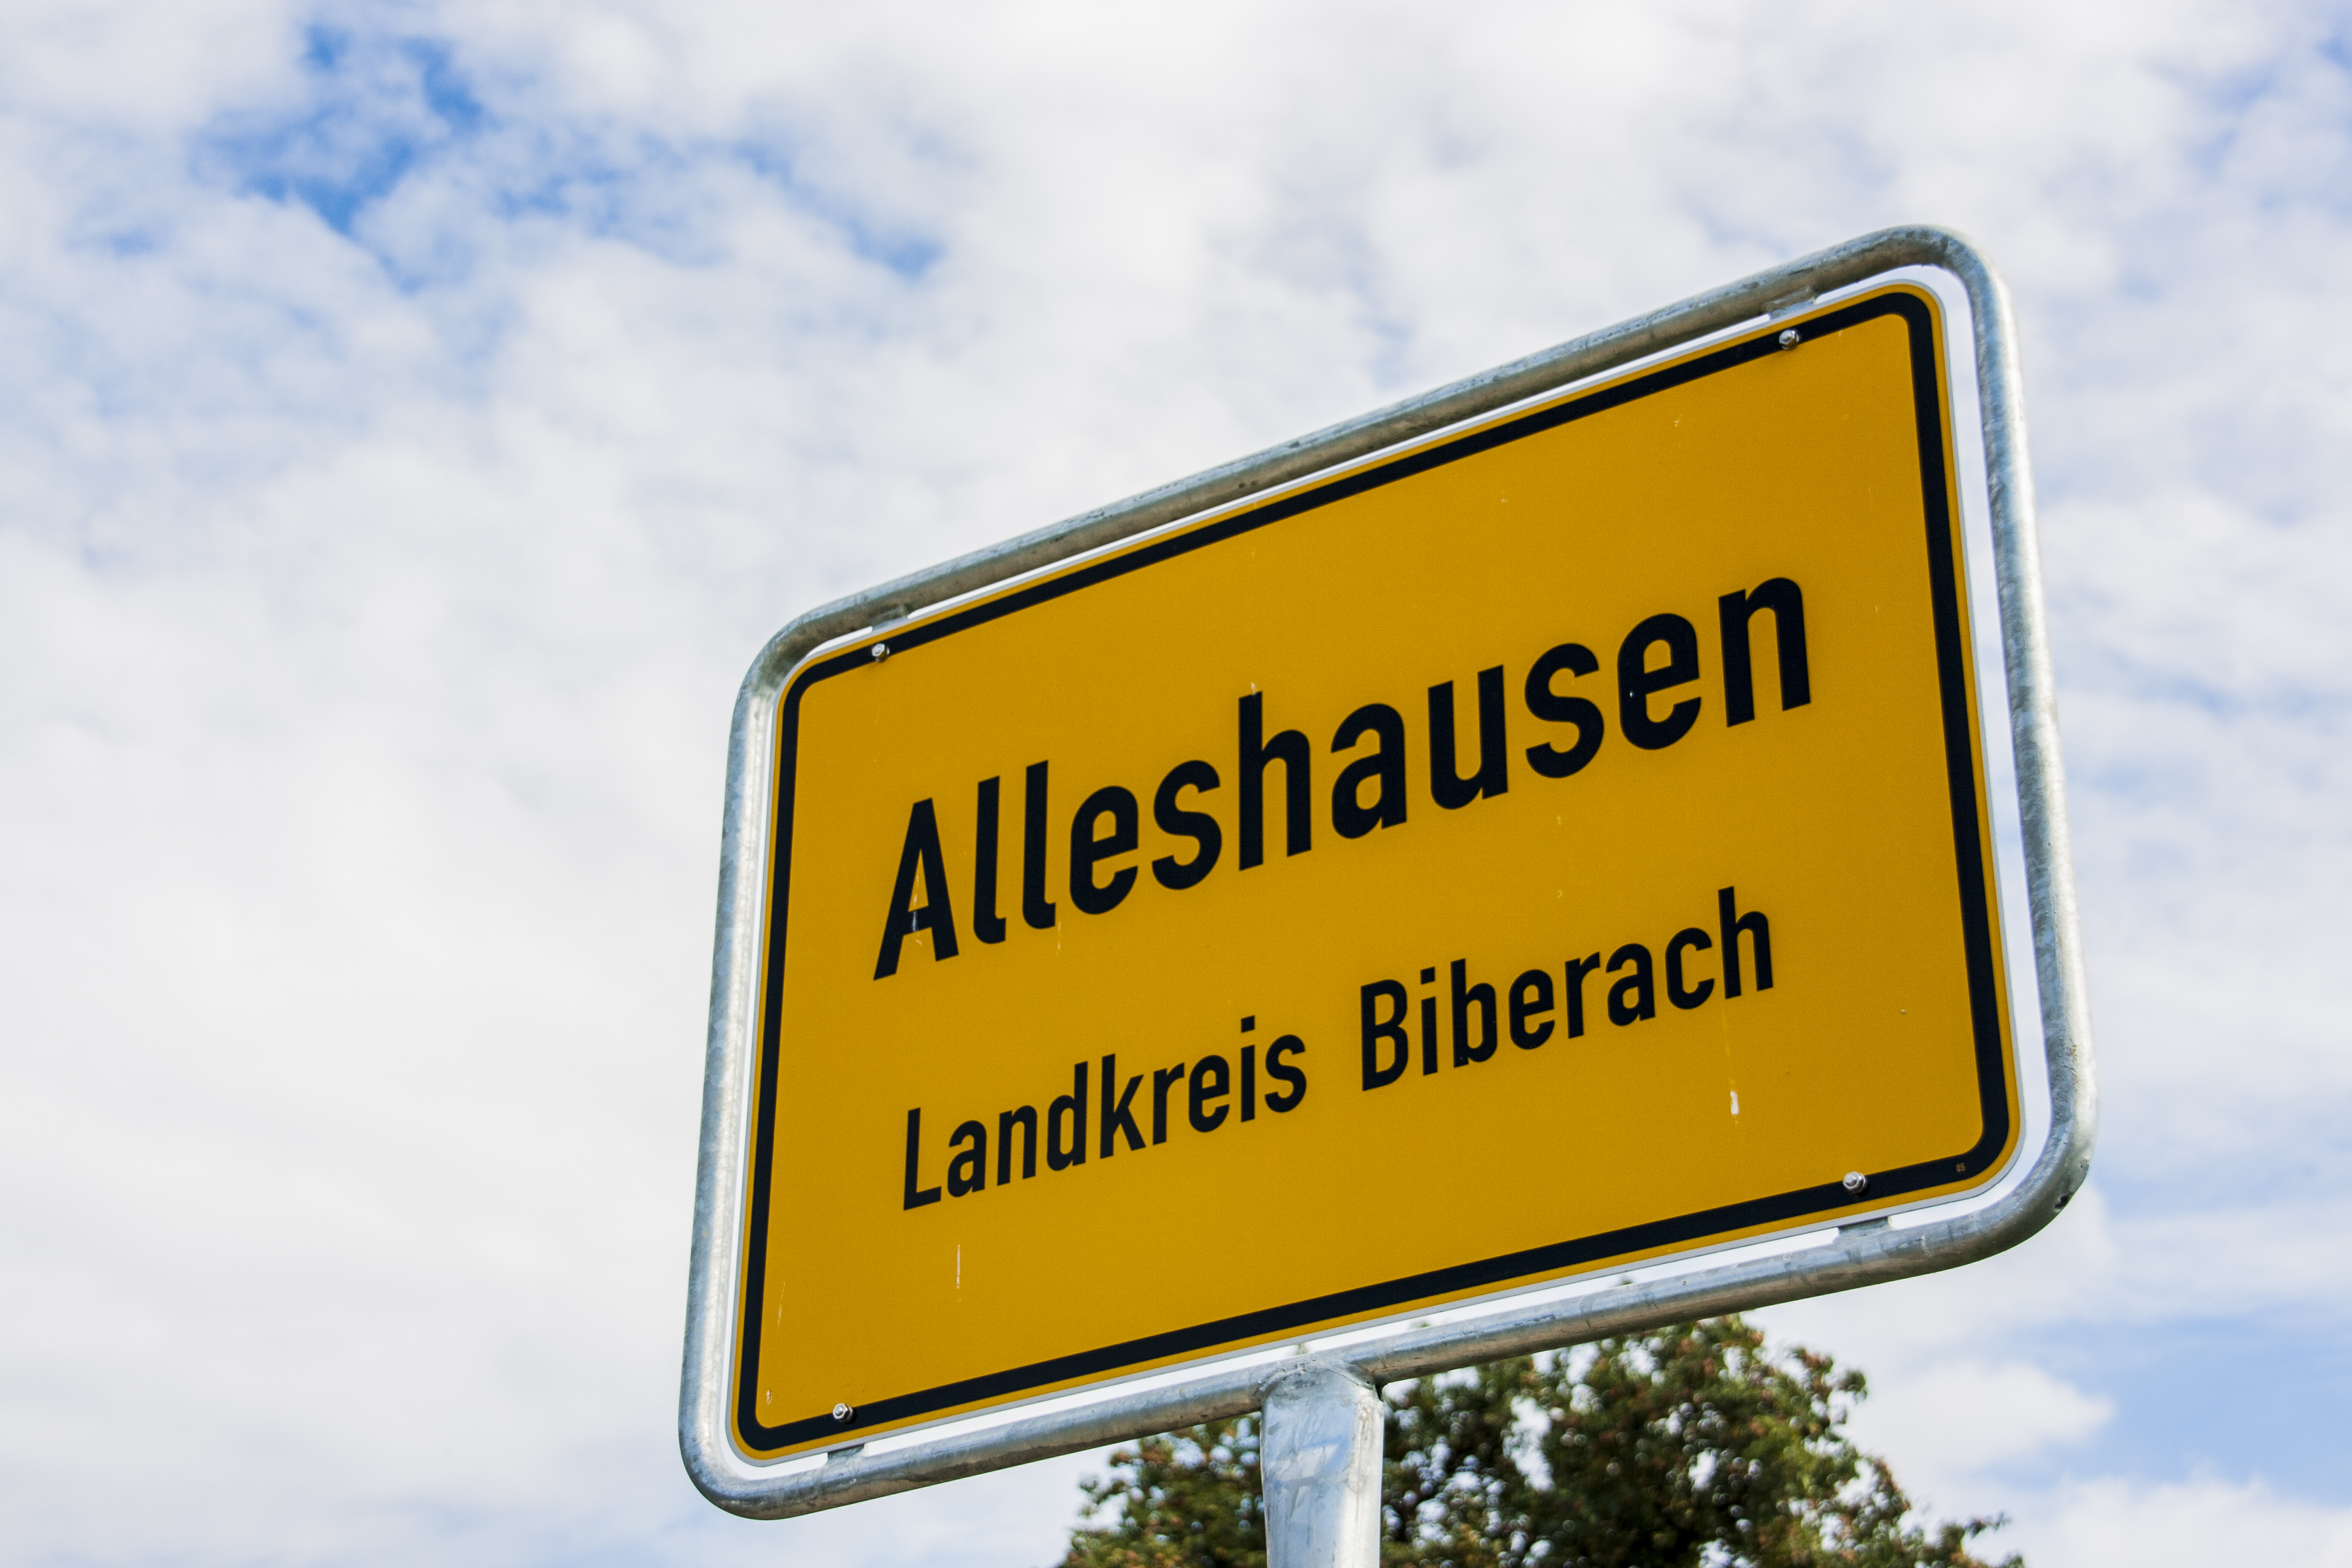 Alleshausen